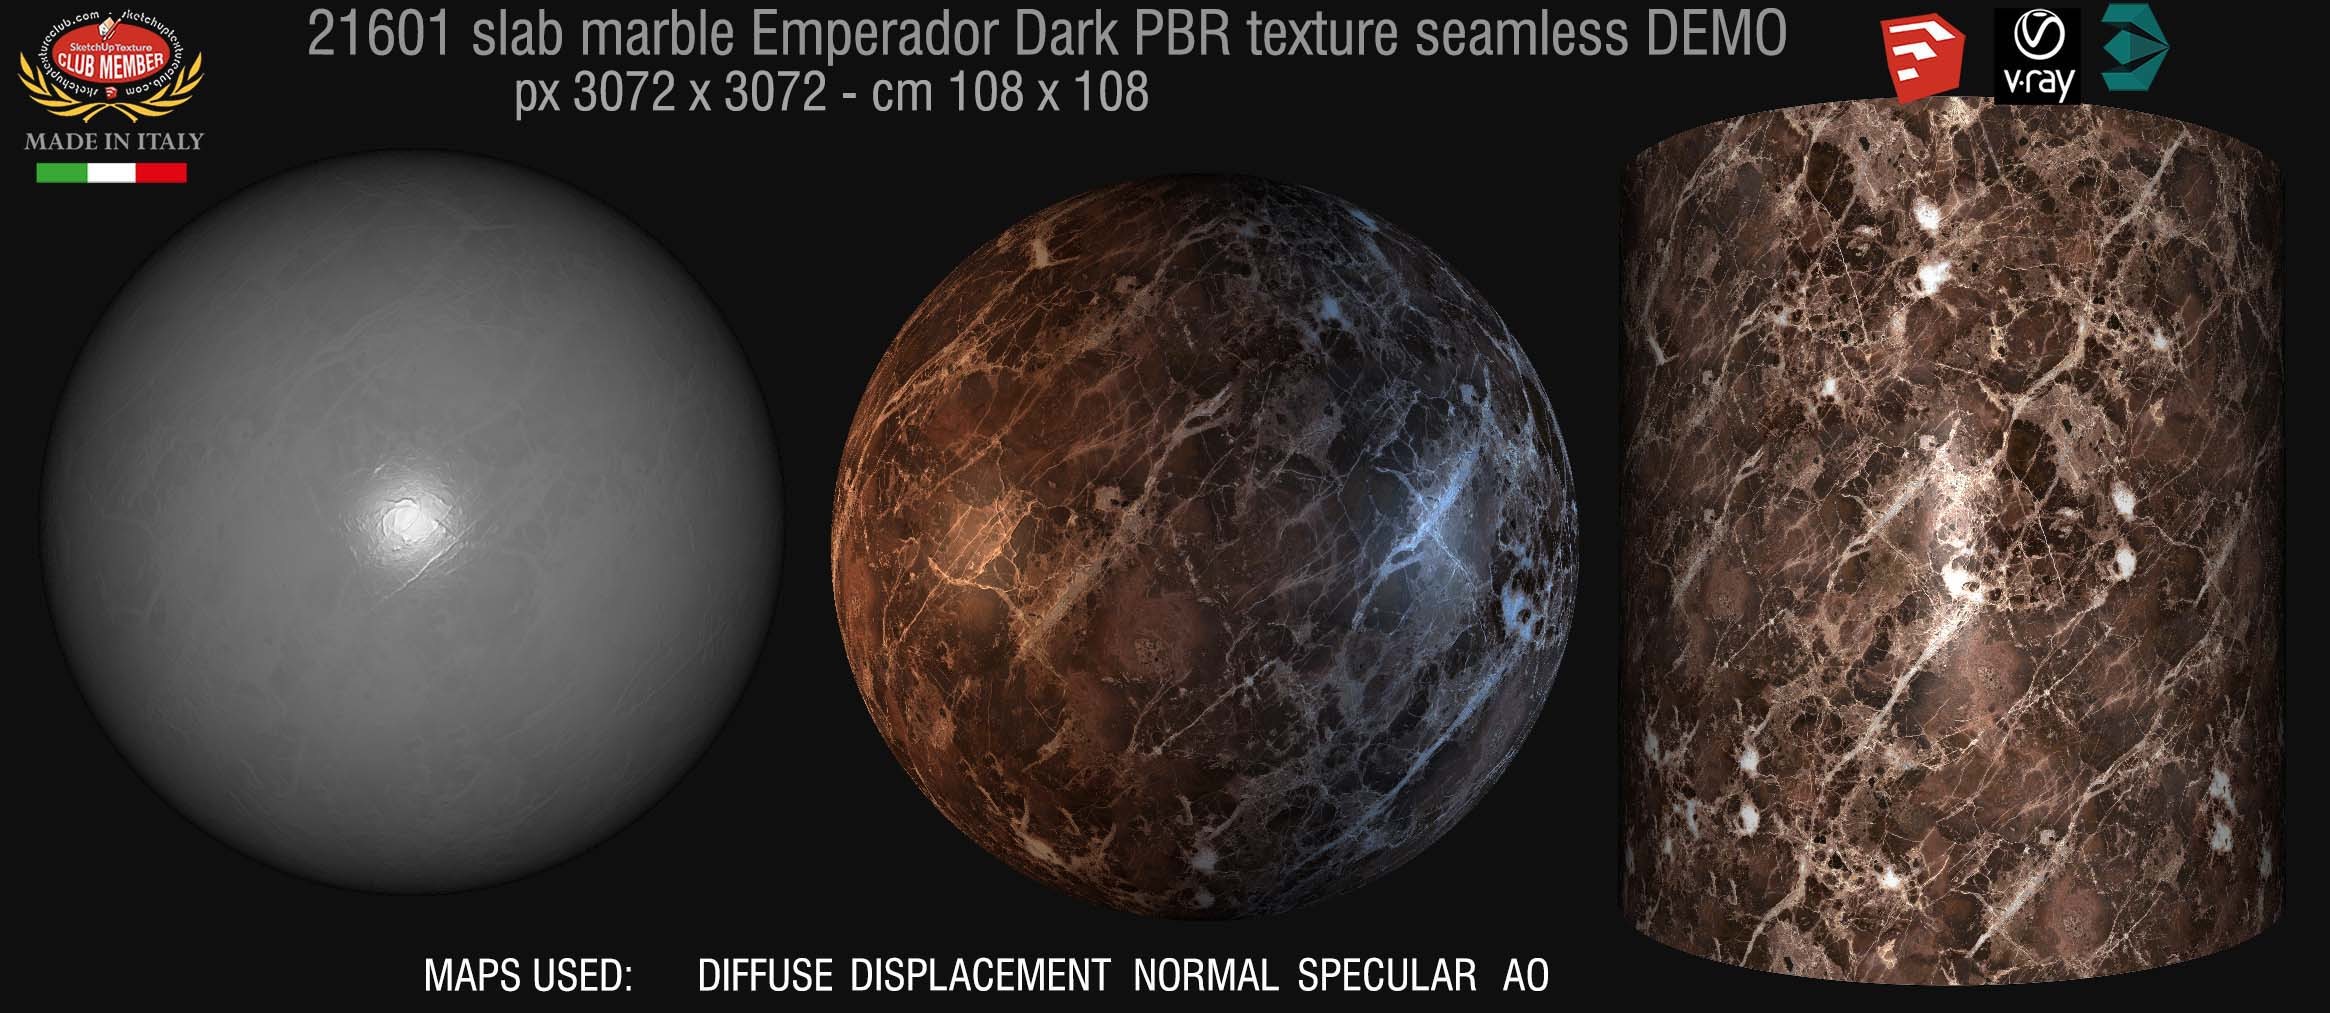 21601 slab marble Emperador dark PBR texture seamless DEMO